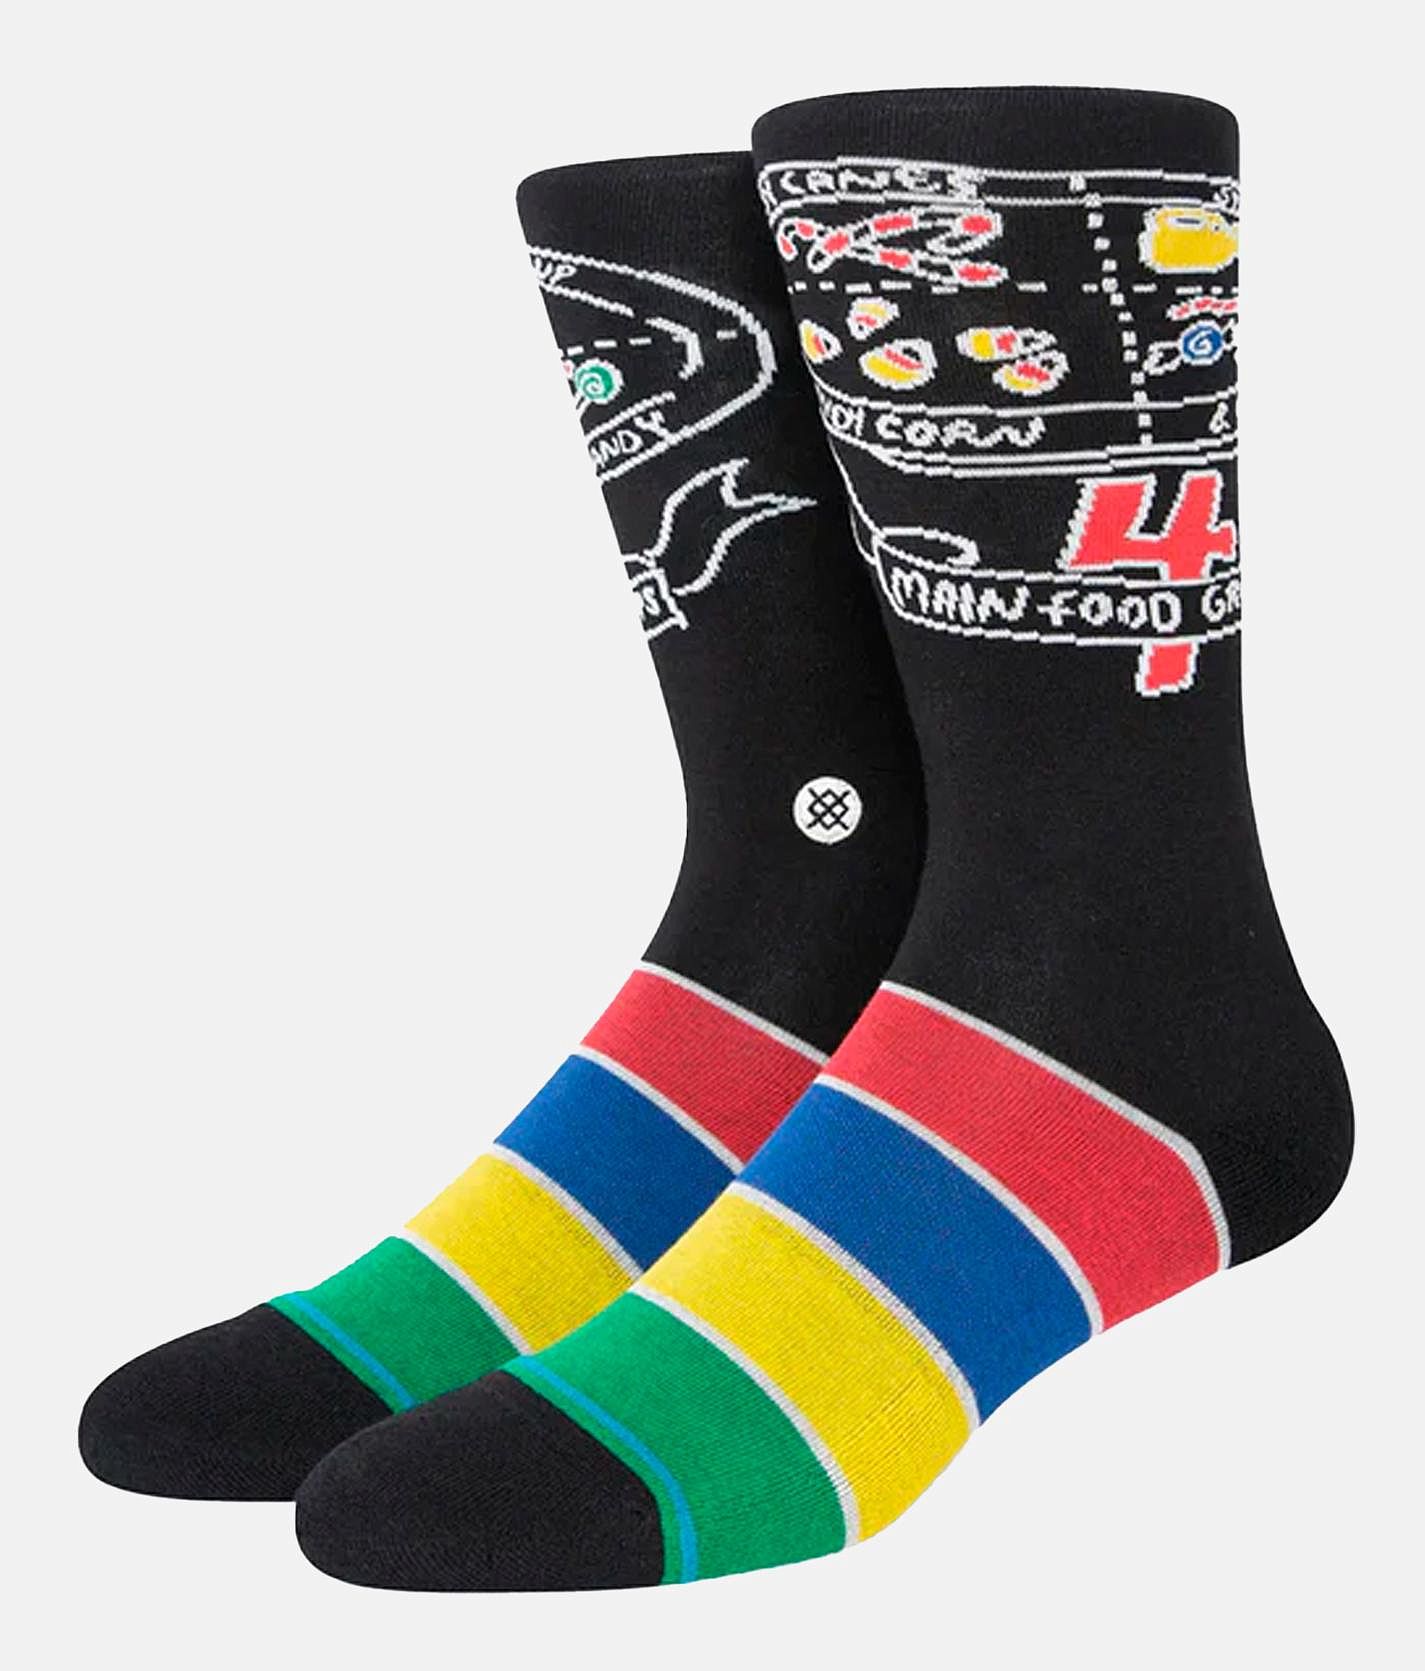 On the verge campaign Sports Stance Elf Food Groups Socks - Men's Socks in Black | Buckle